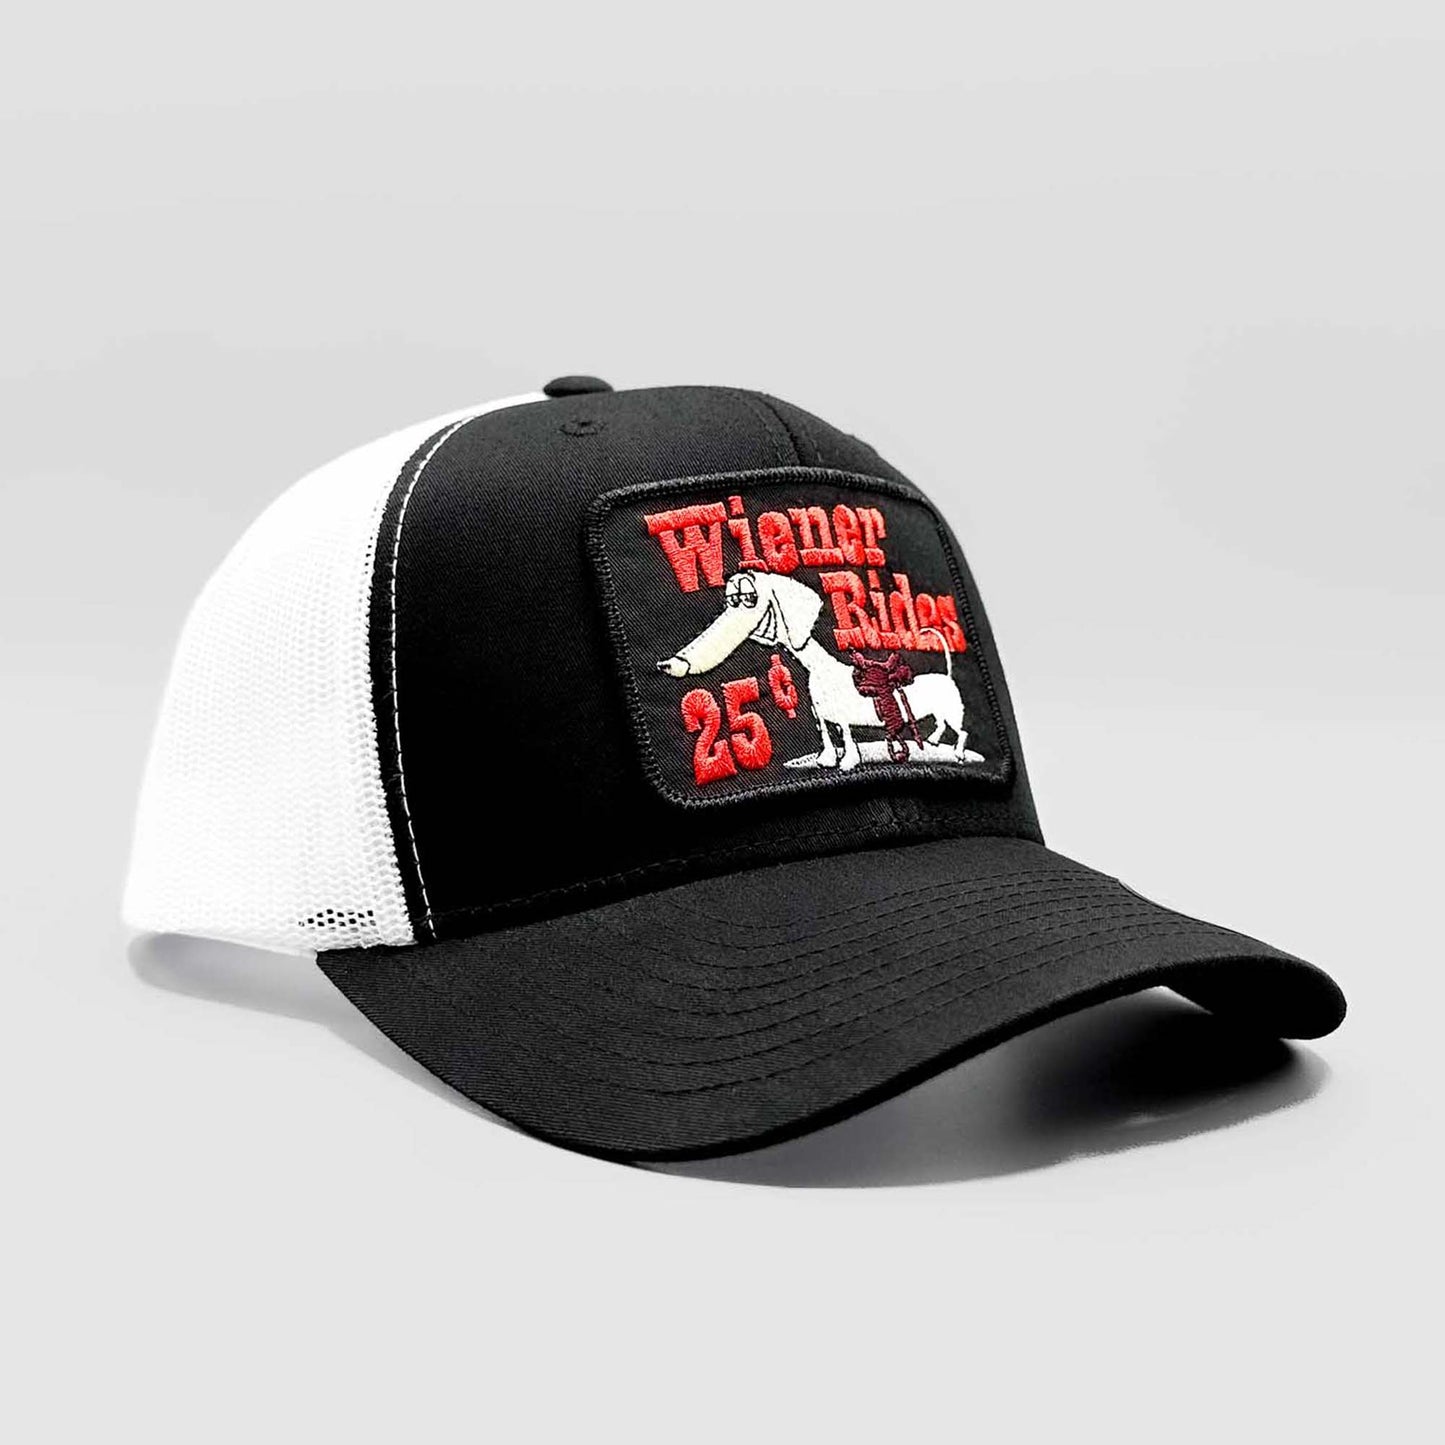 Wiener Rides 25 Cents Black Patch Hat